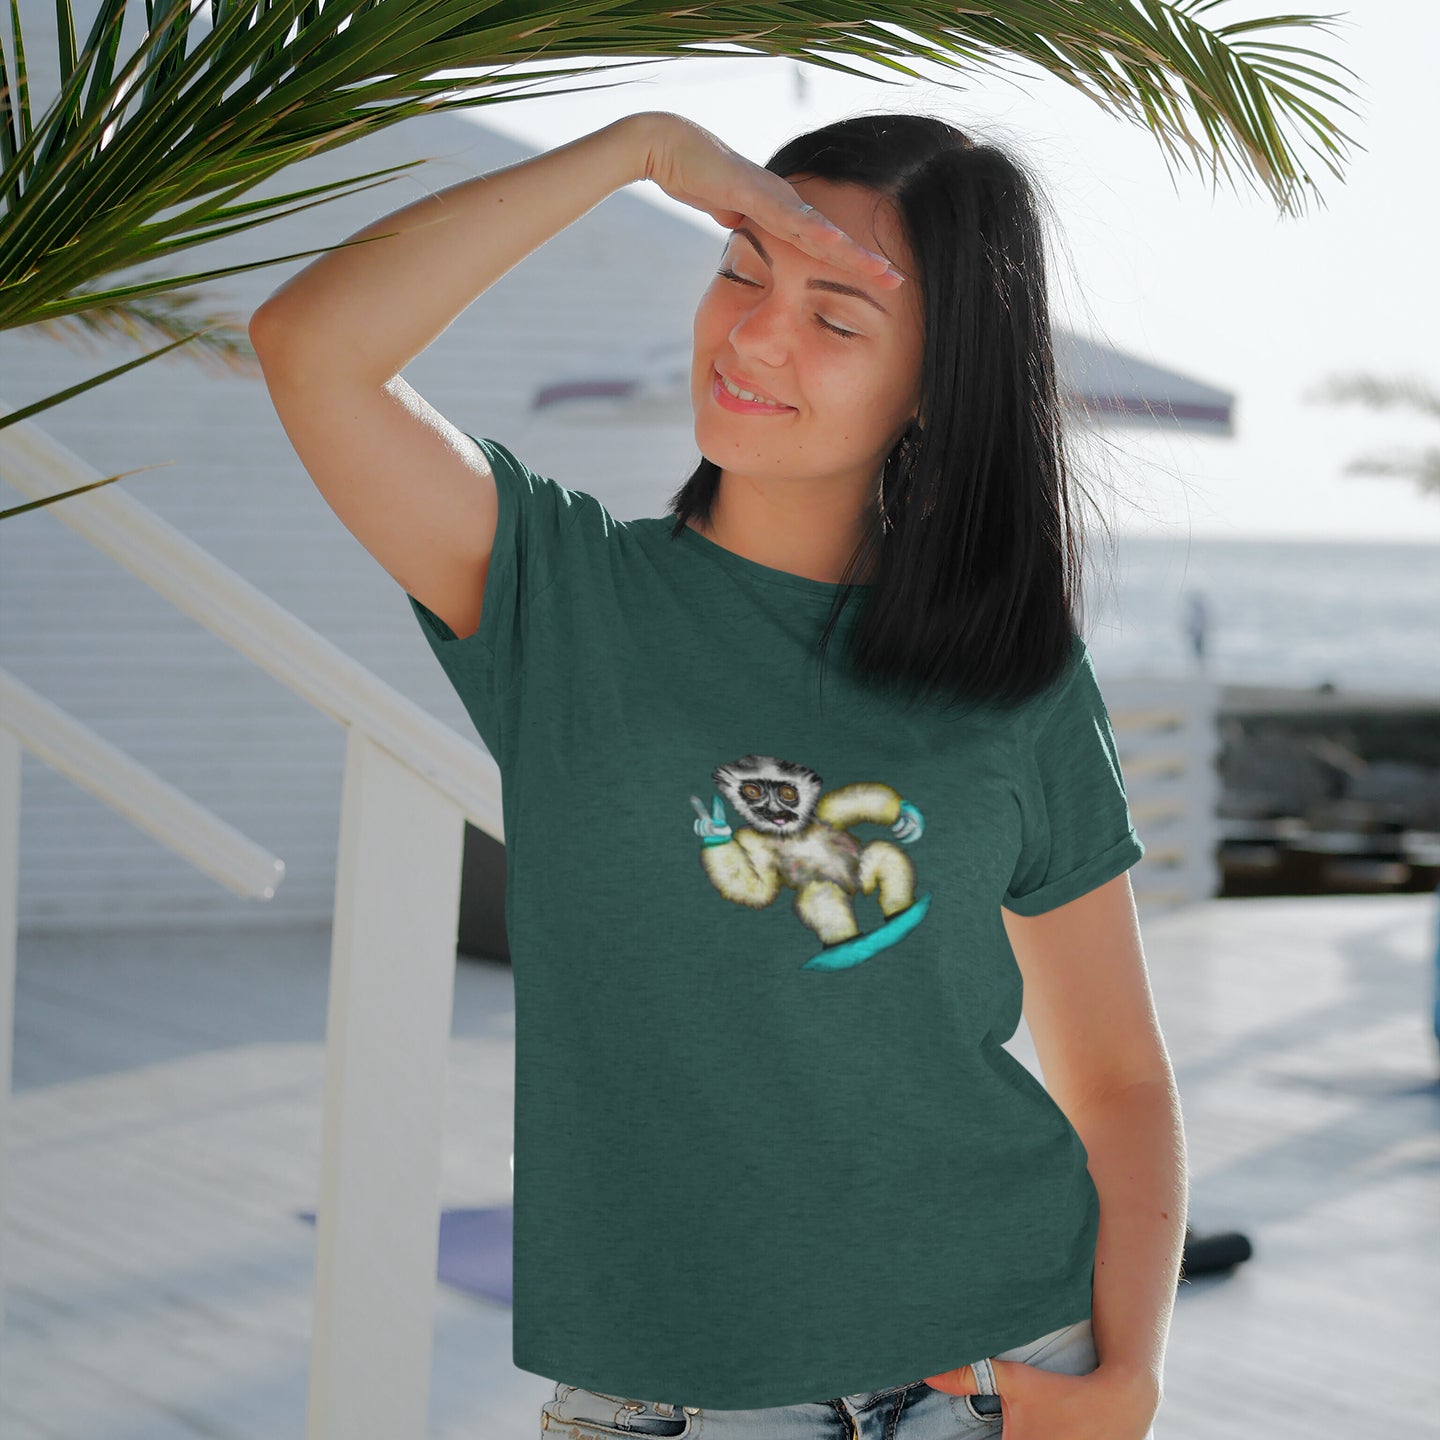 Lemur Snowboarder | 100% Organic Cotton T Shirt worn by a woman on the beach